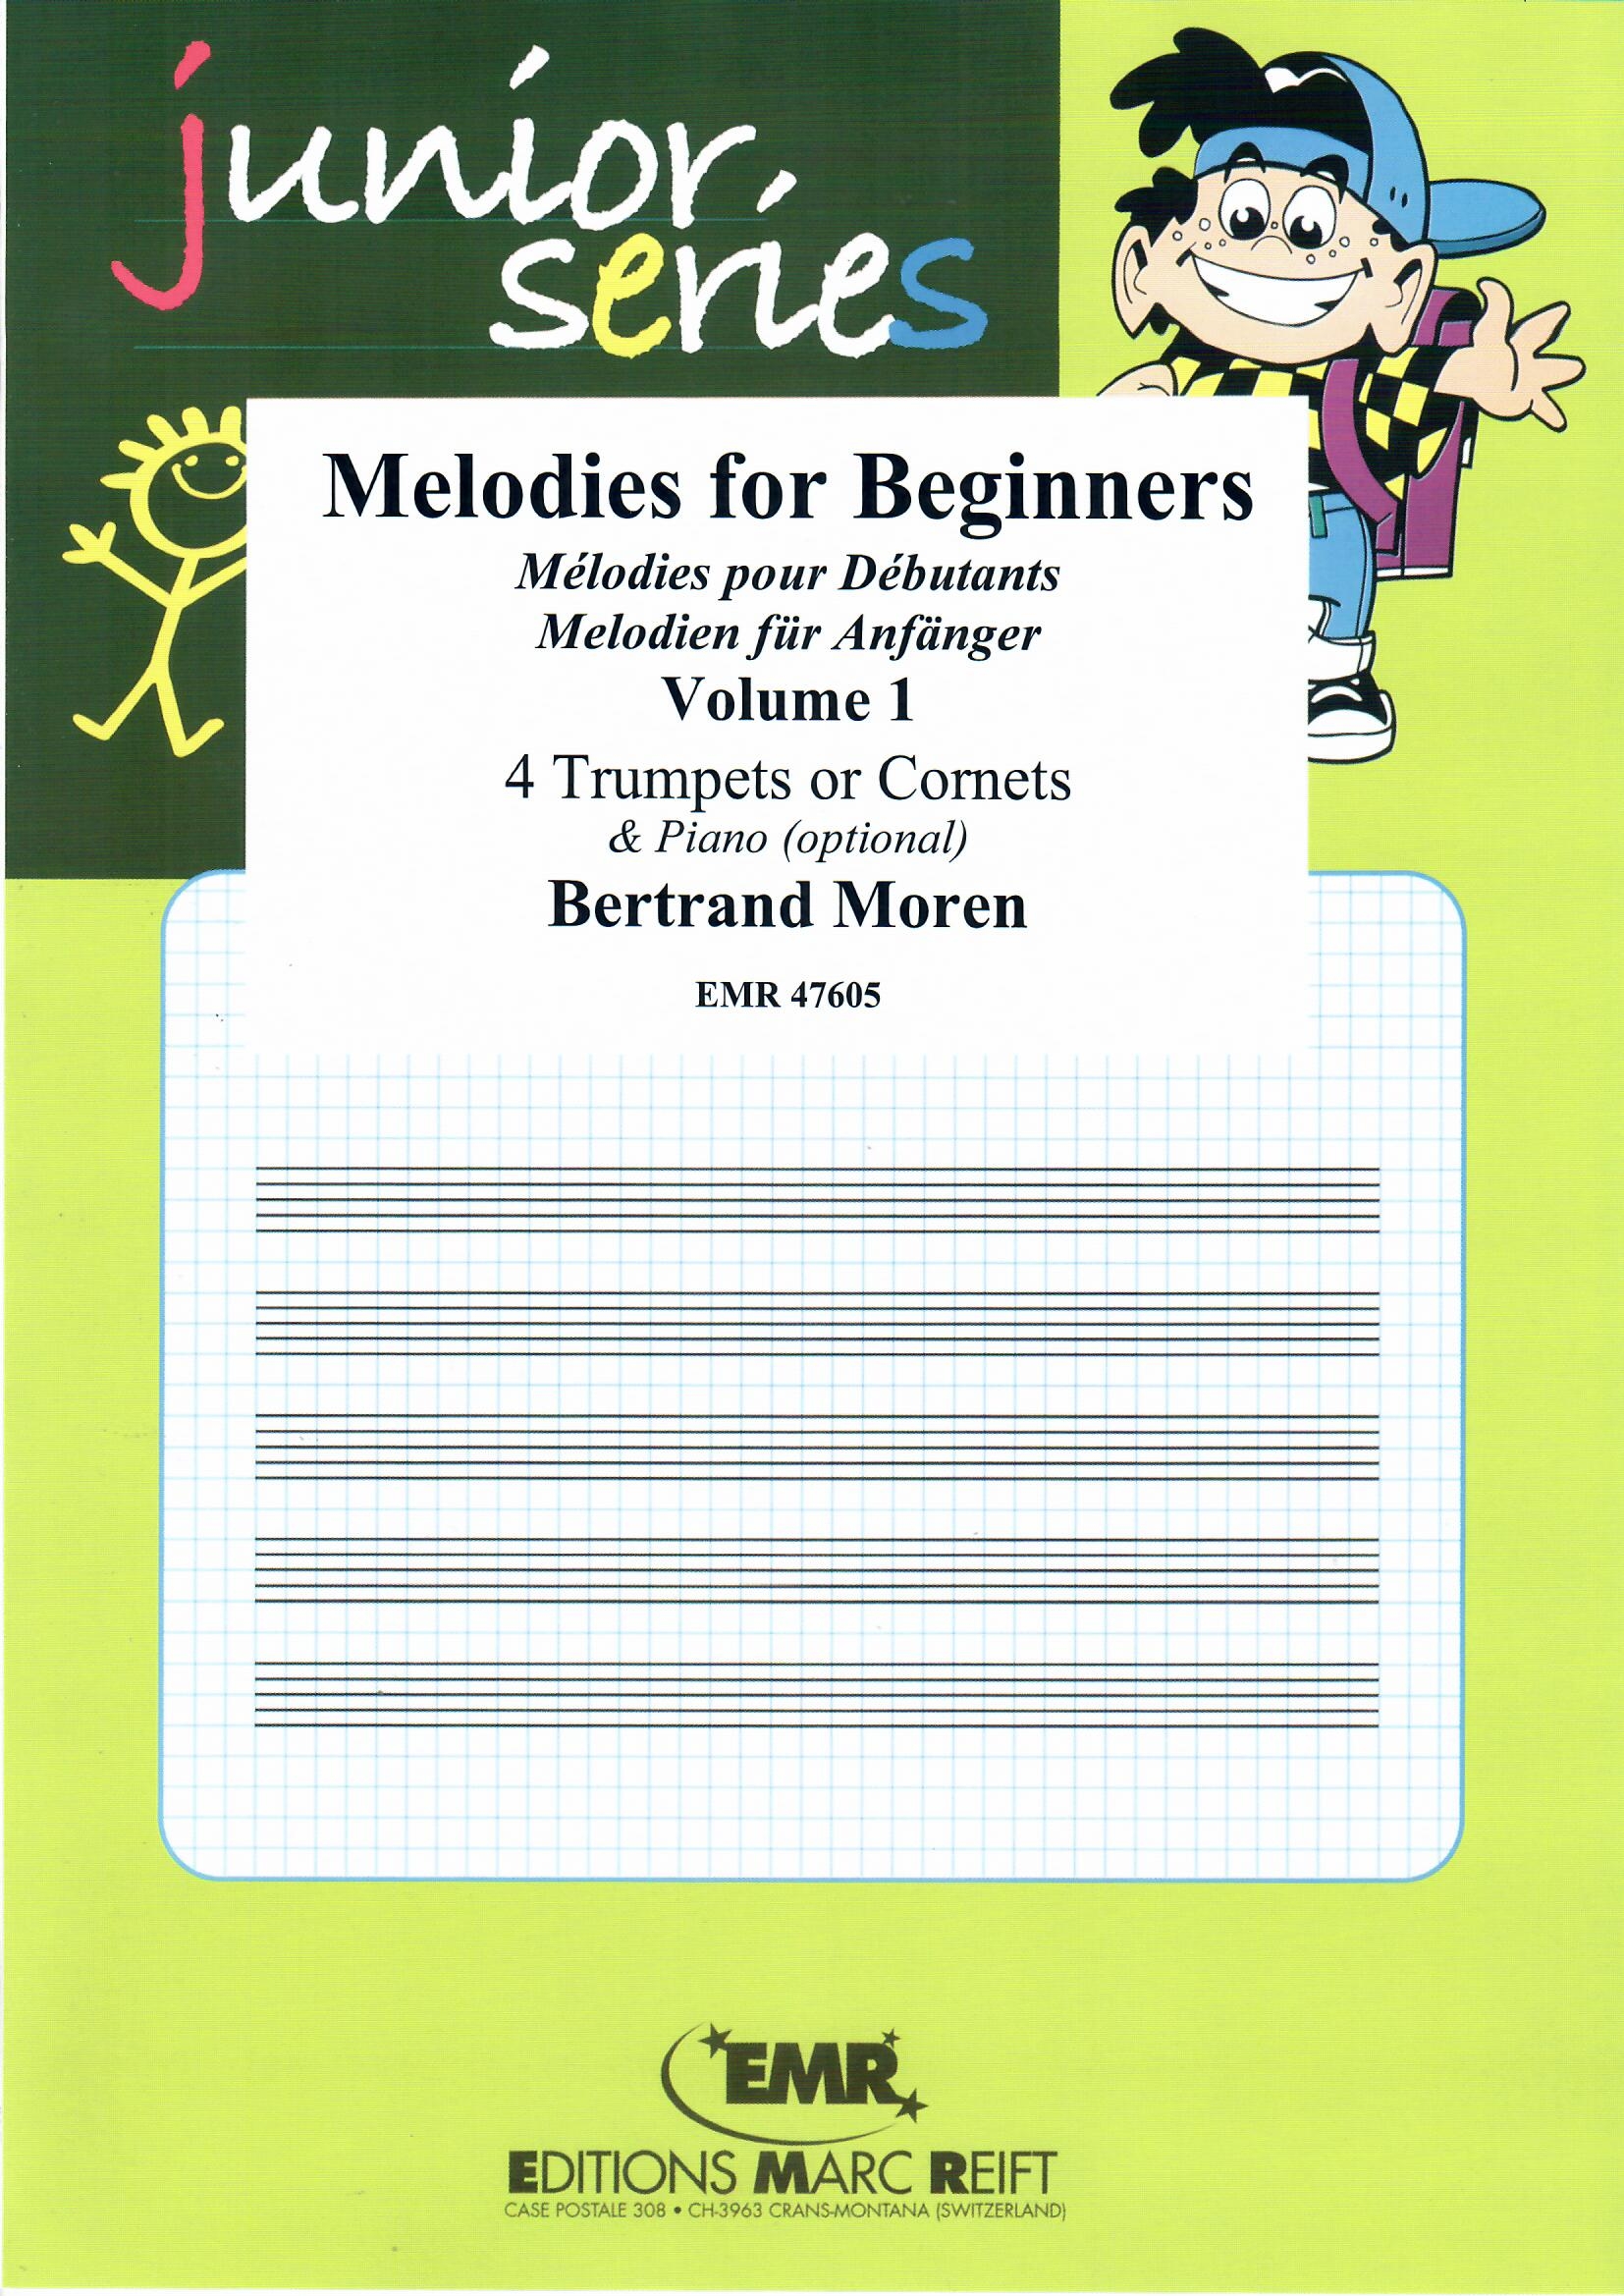 MELODIES FOR BEGINNERS VOLUME 1 - Trumpet Quartet, EMR Brass Quartets